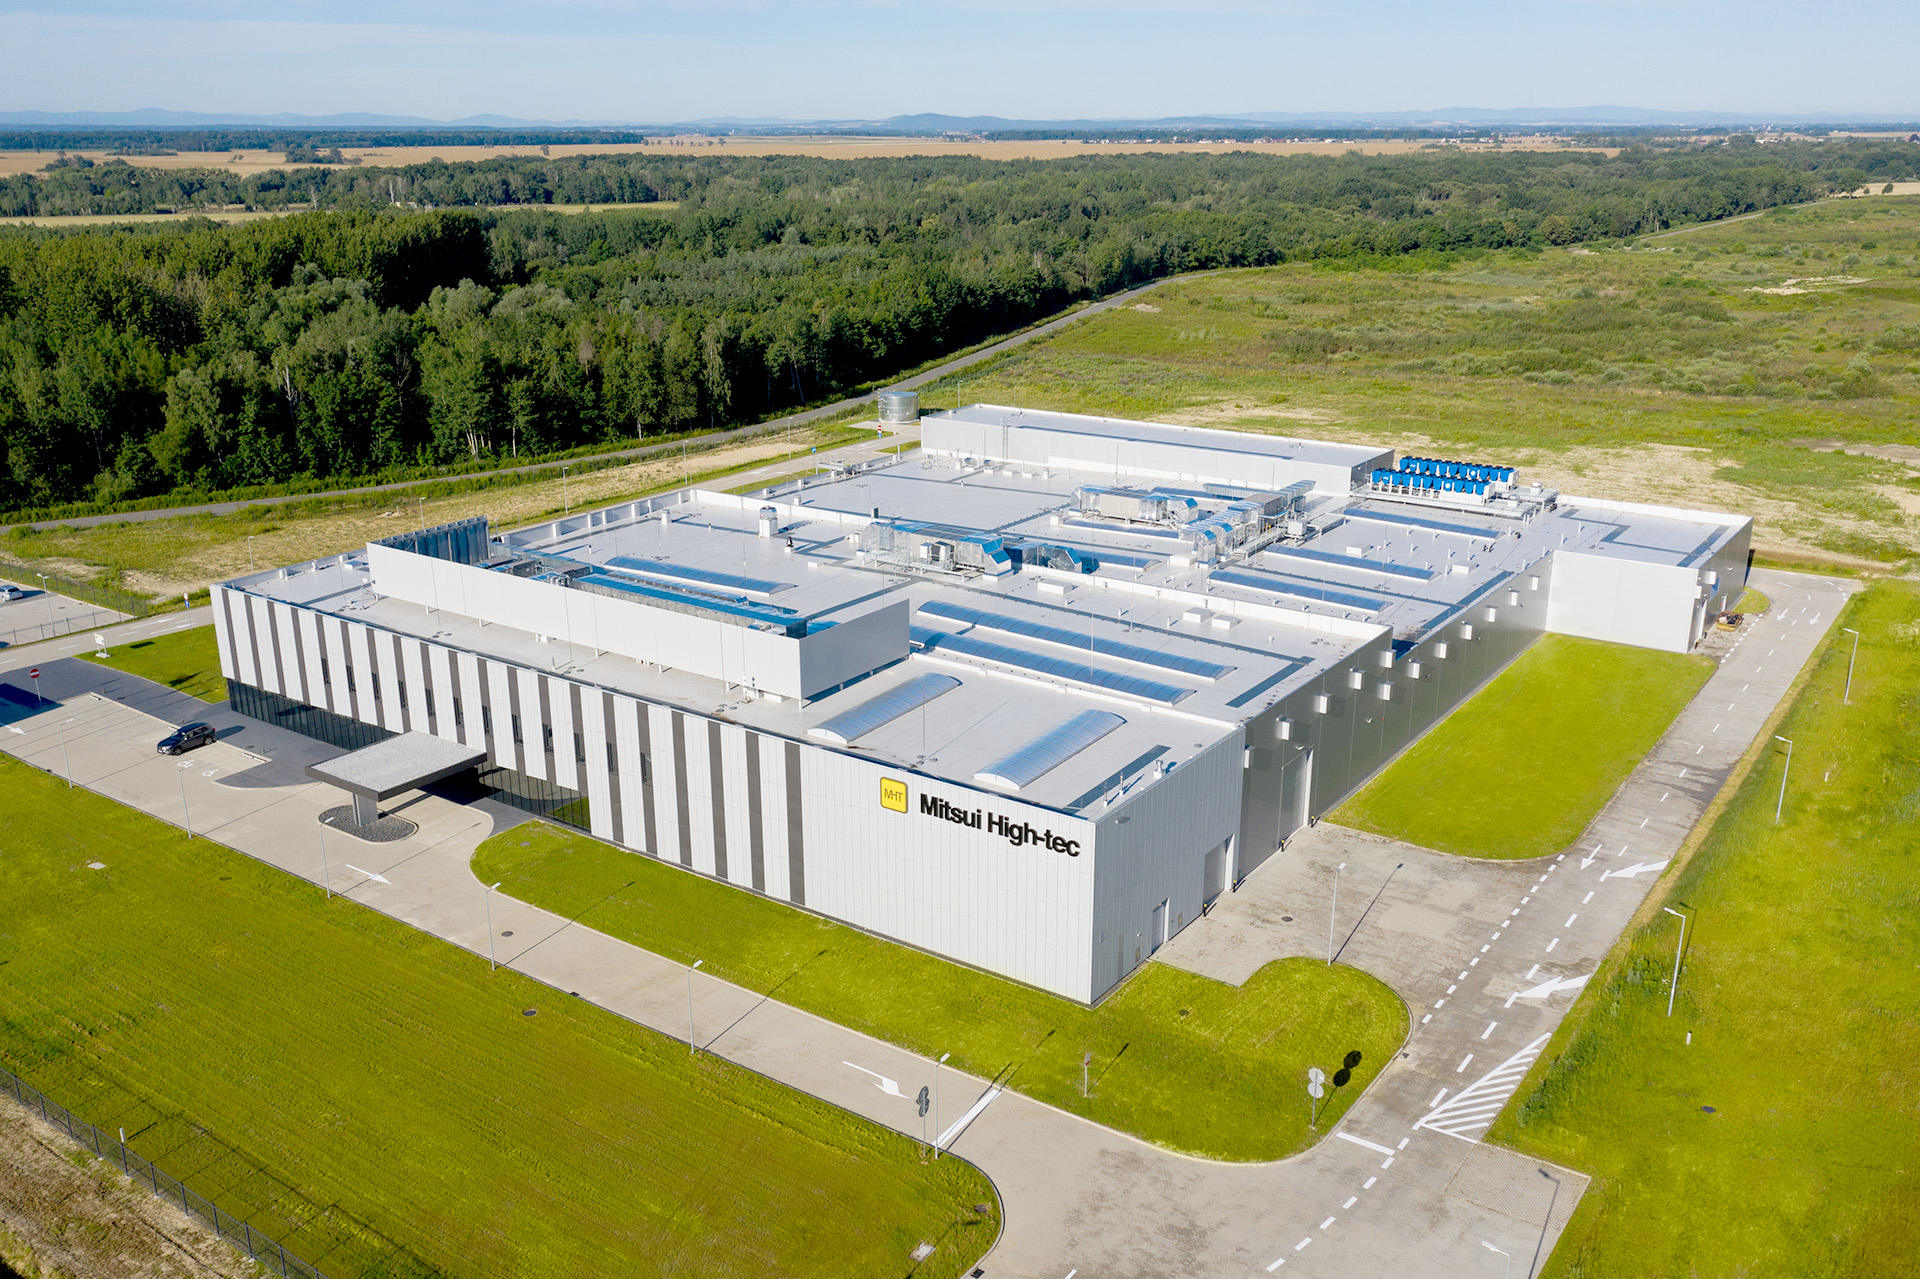 Mitsuhi High-Tec factory in Skarbimierz Poland built by Takenaka Europe